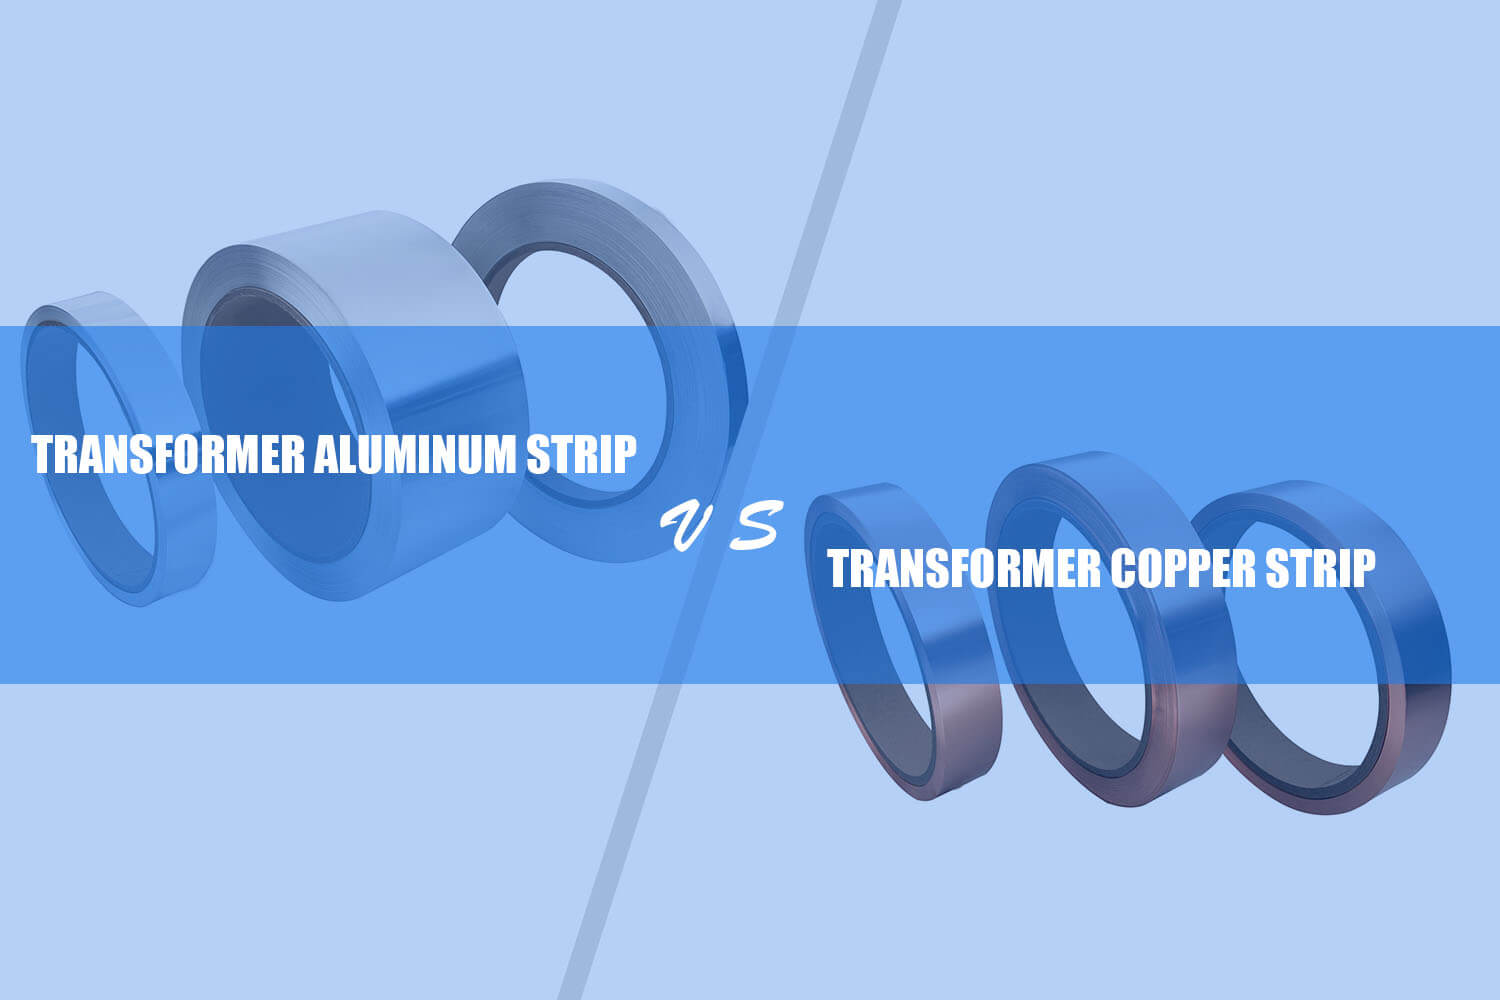 transformer aluminum strip vs copper strip blog banner